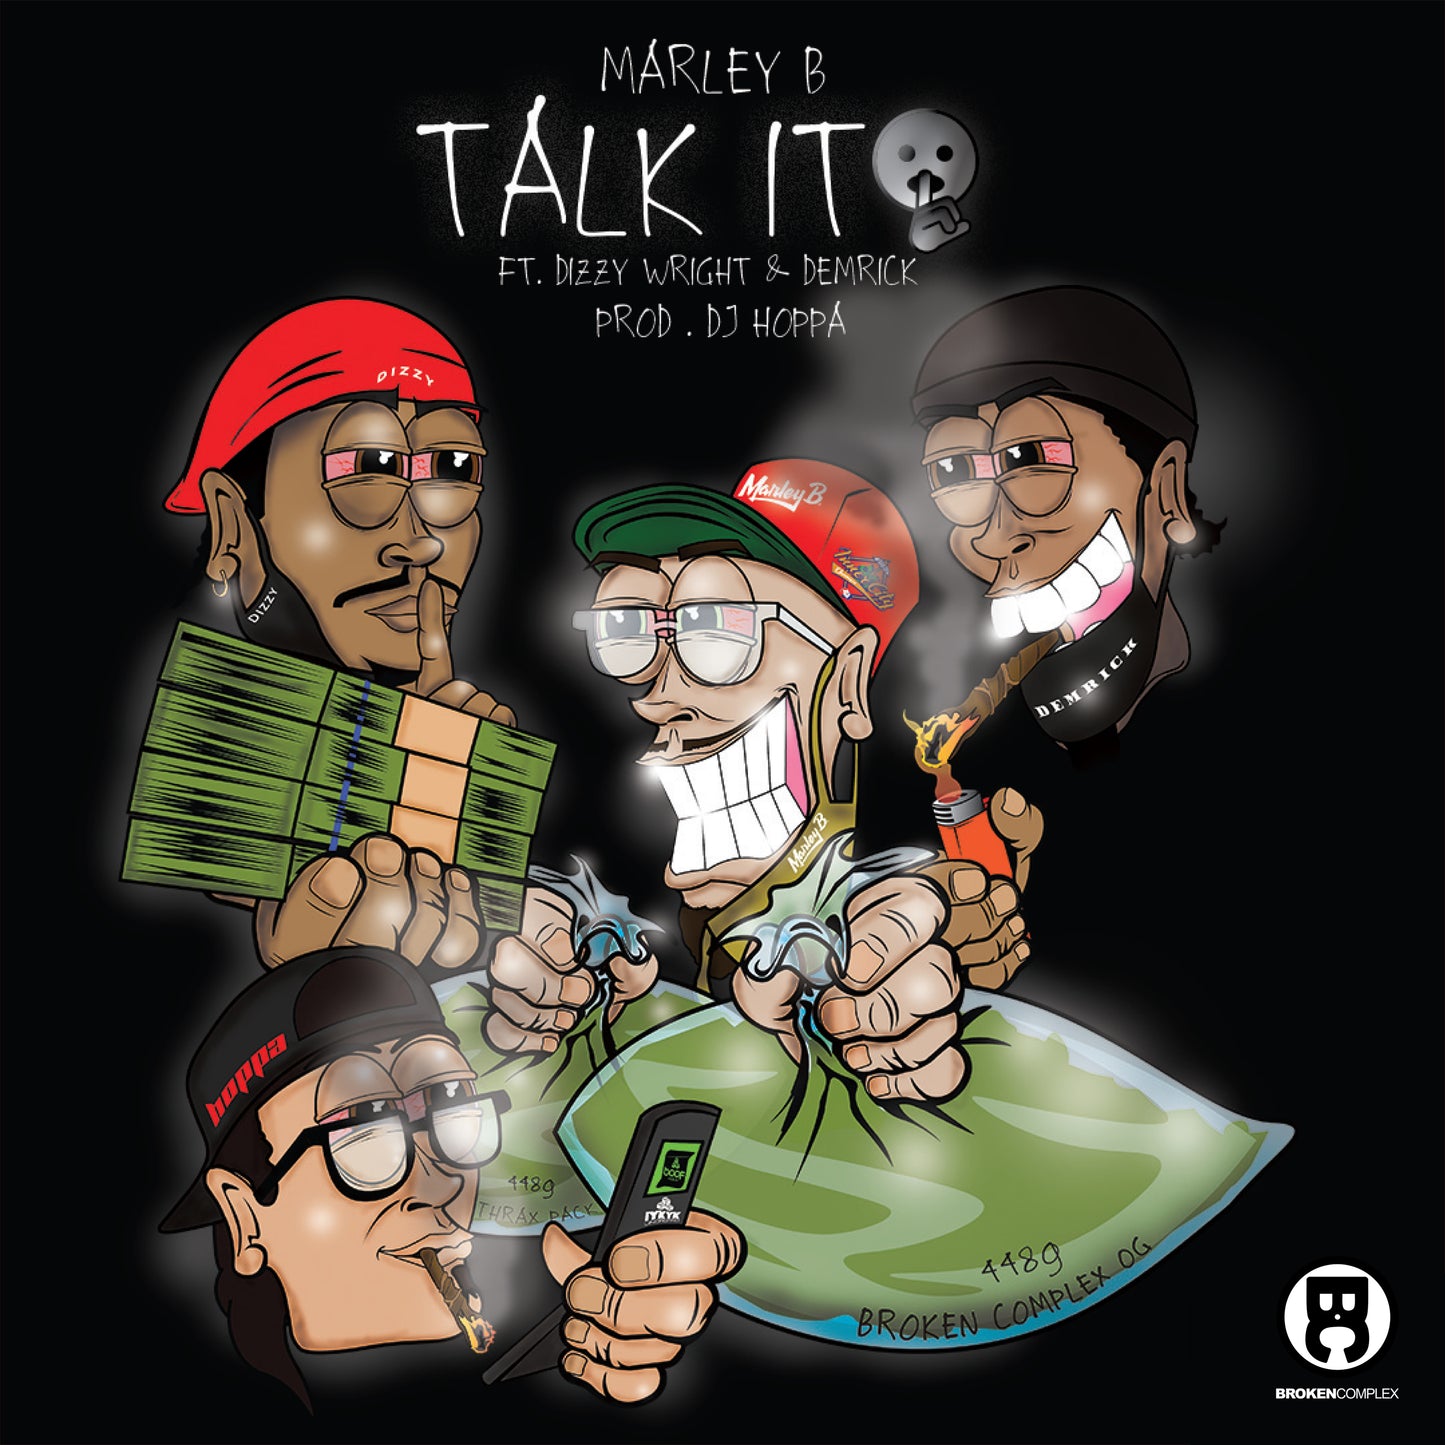 Talk It feat. Dizzy Wright & Demrick (Single)